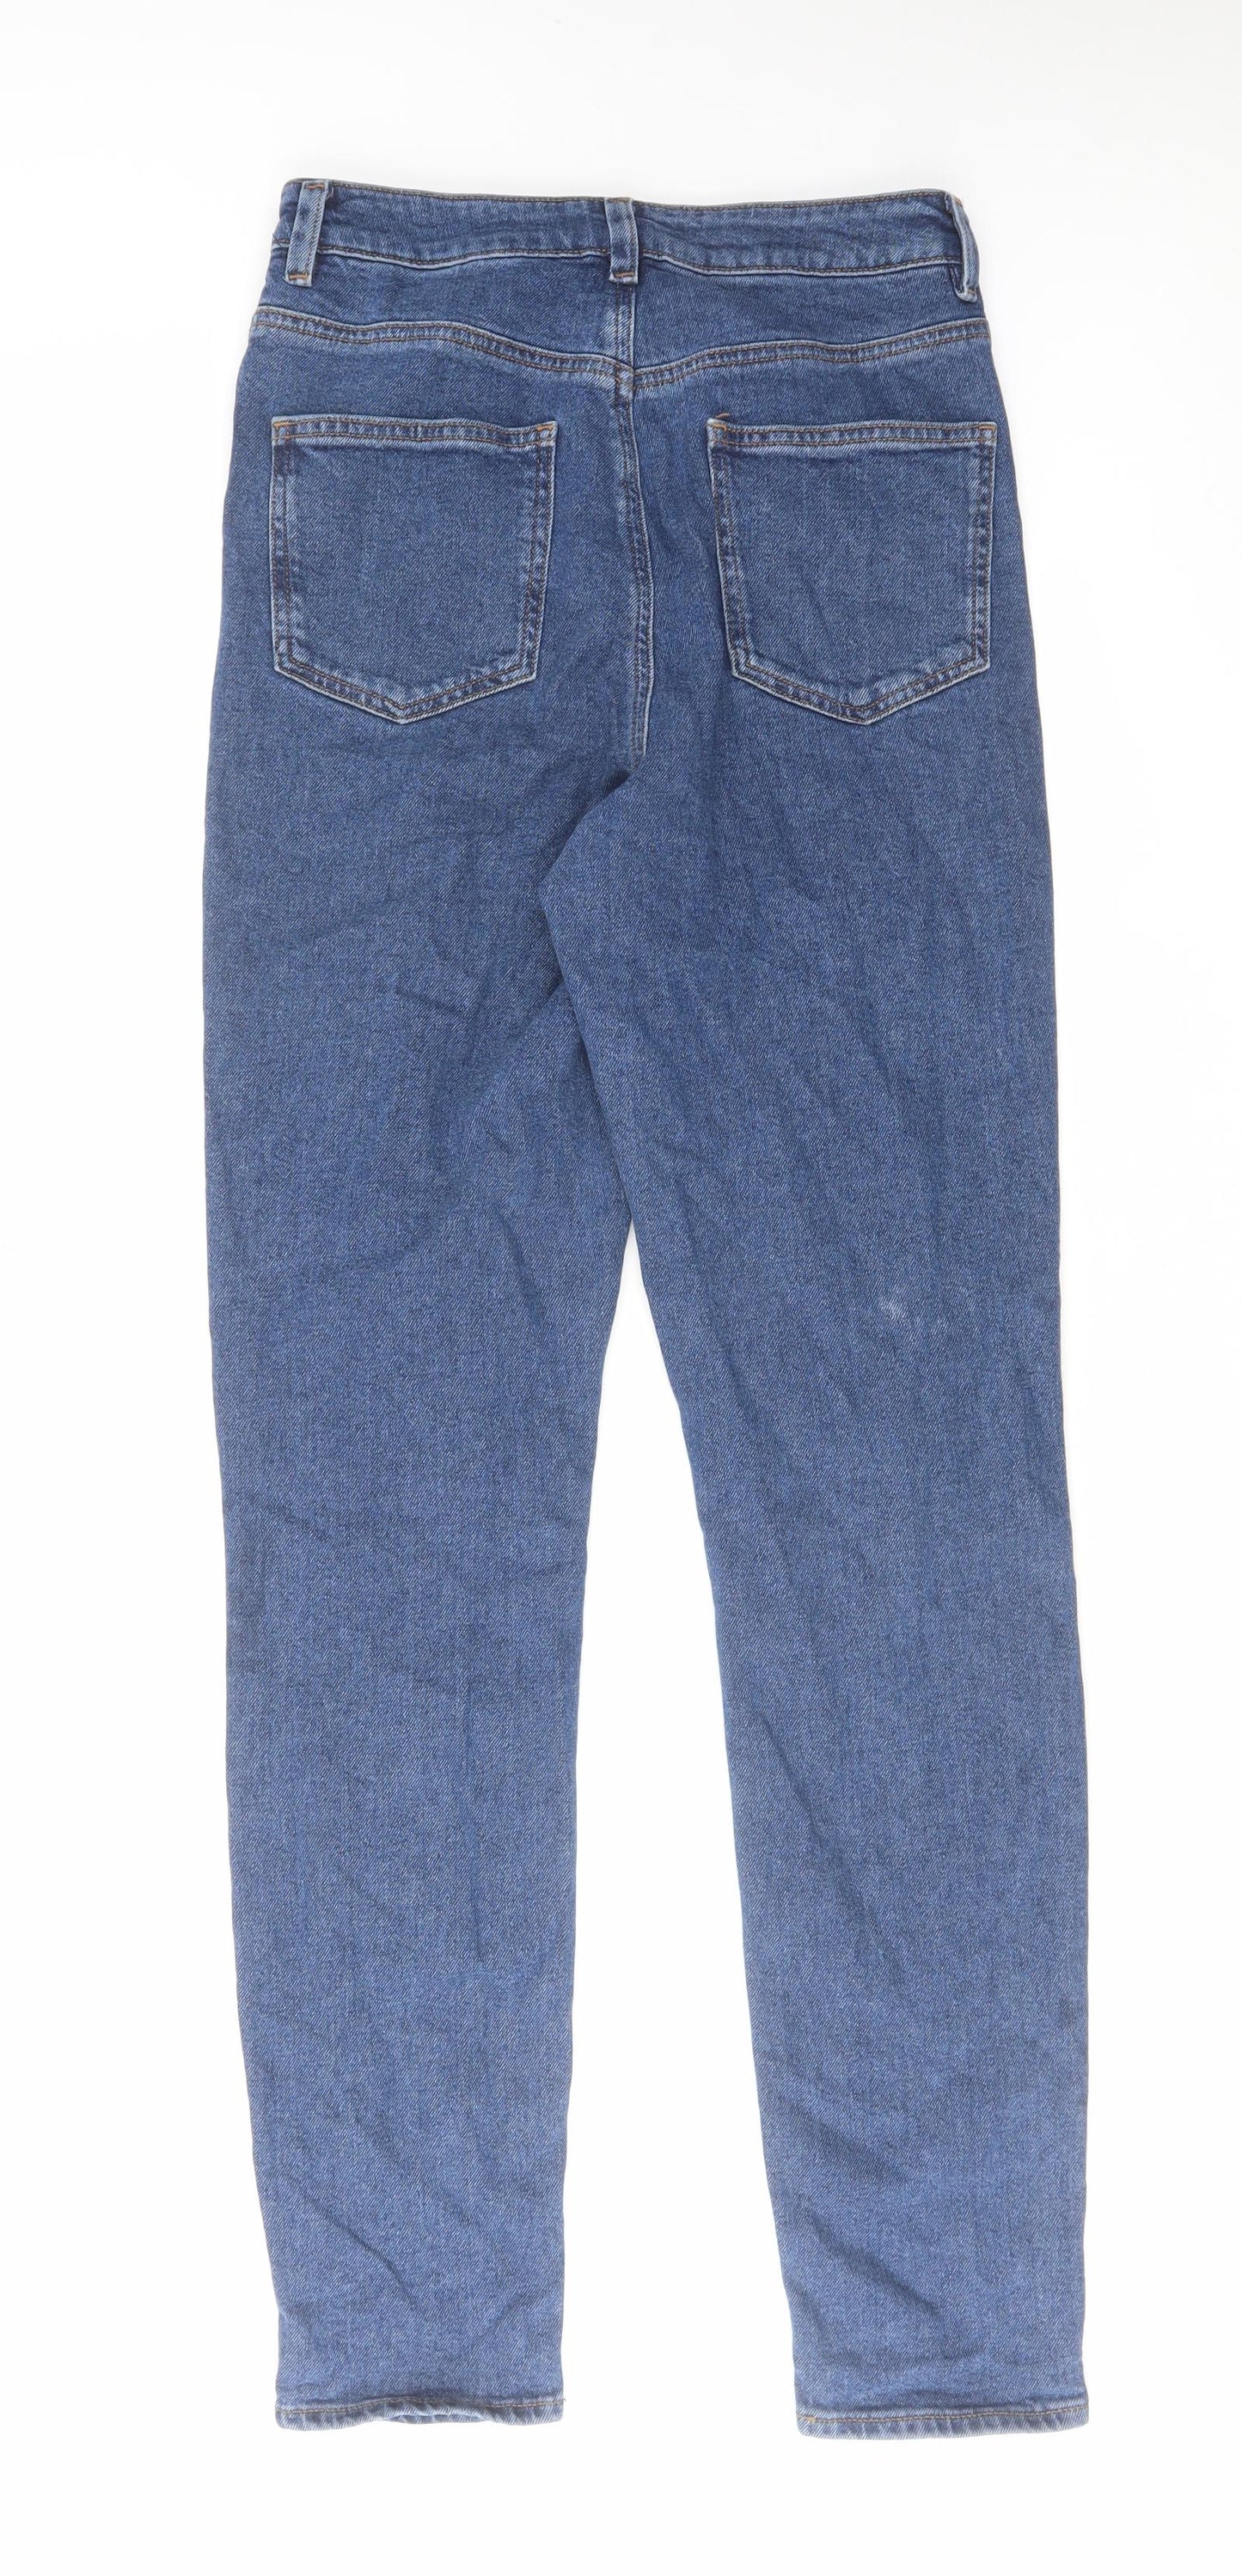 ASOS Womens Blue Cotton Skinny Jeans Size 28 in L36 in Regular Zip